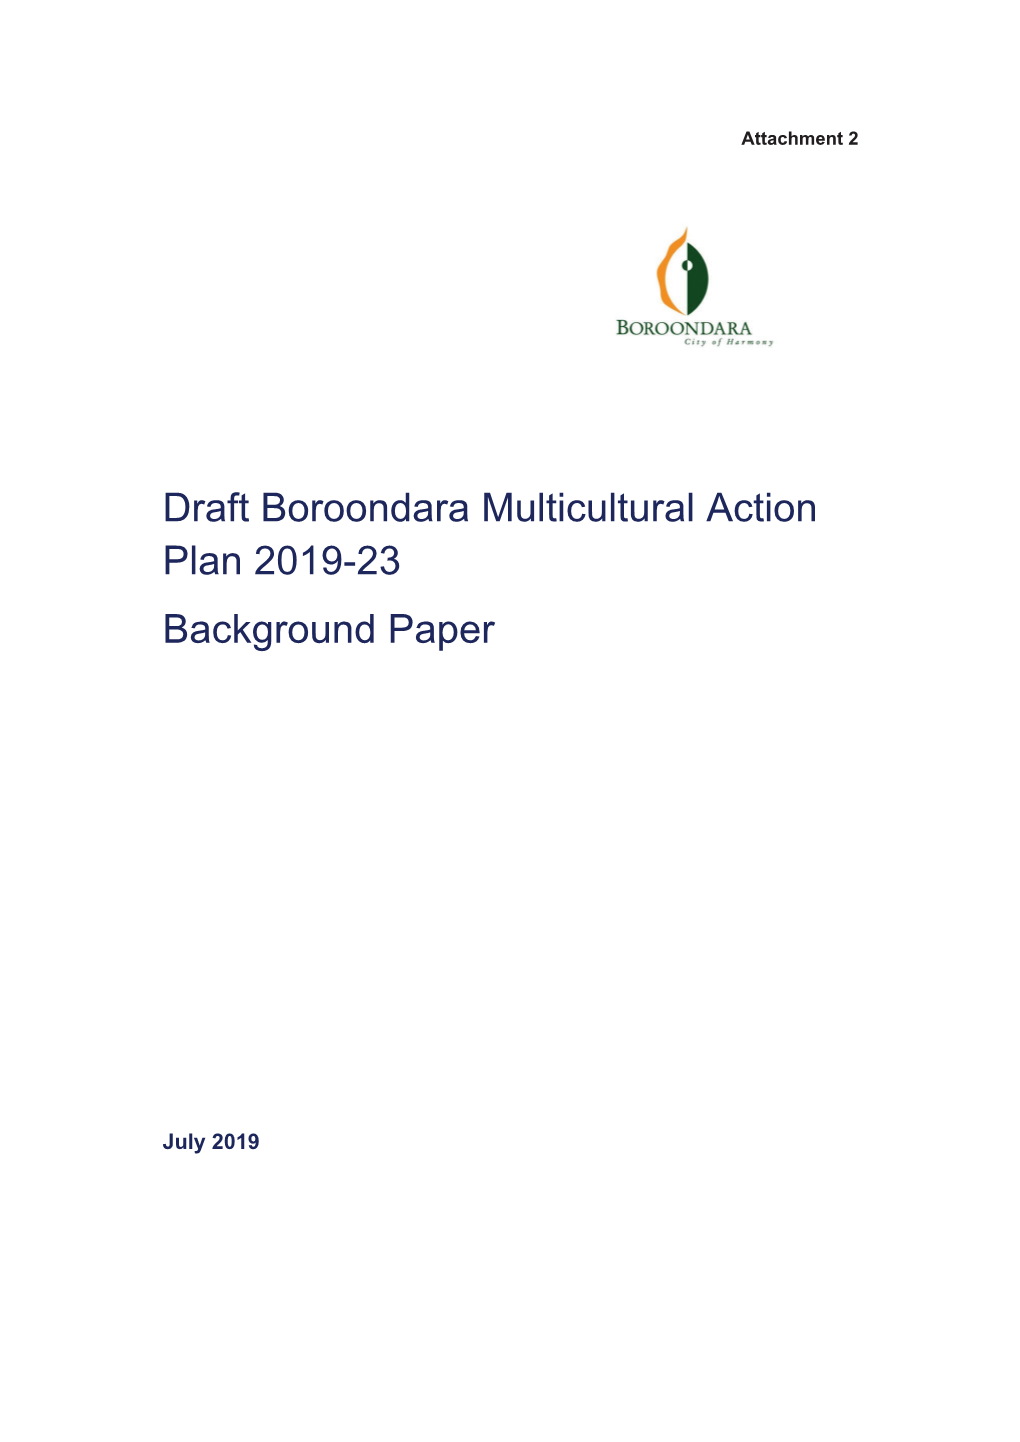 Draft Boroondara Multicultural Action Plan 2019-23 Background Paper